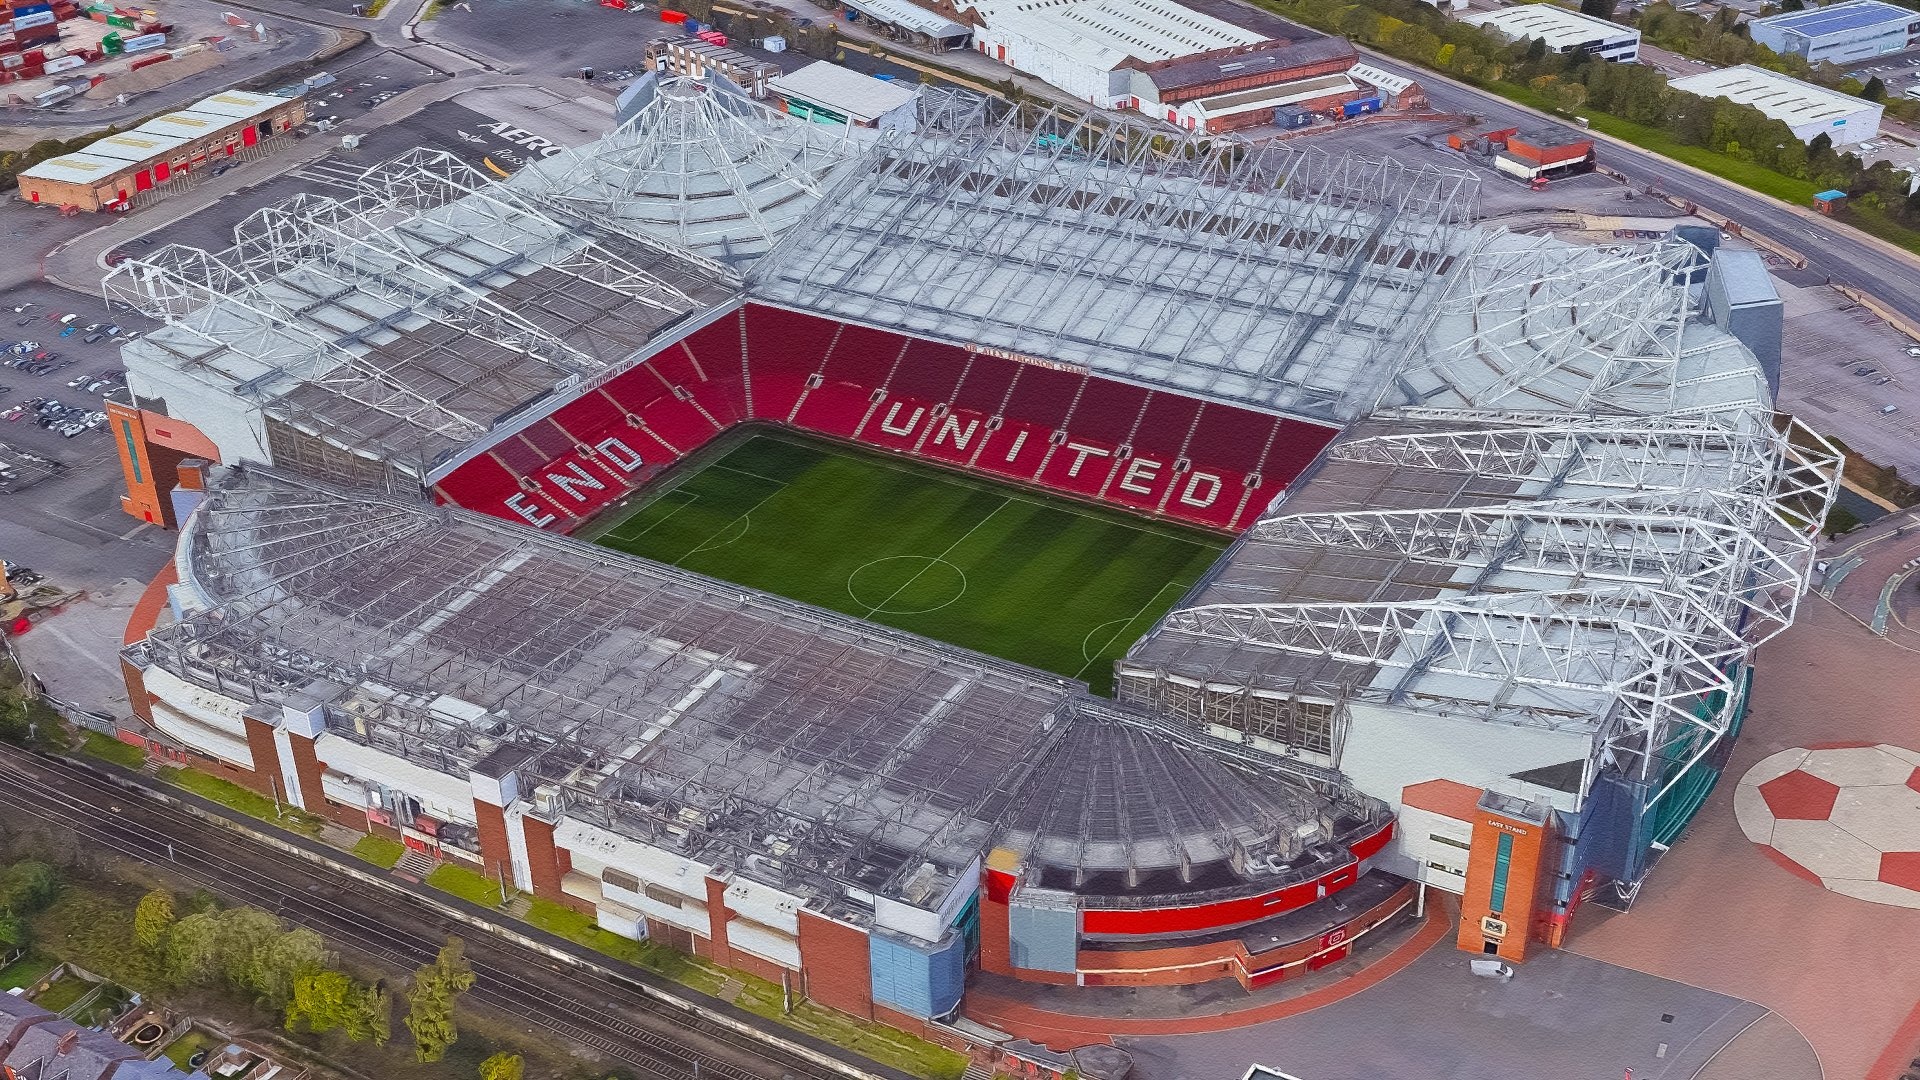 Football Stadium, Manchester United wallpapers, Ultra HD images, 1920x1080 Full HD Desktop